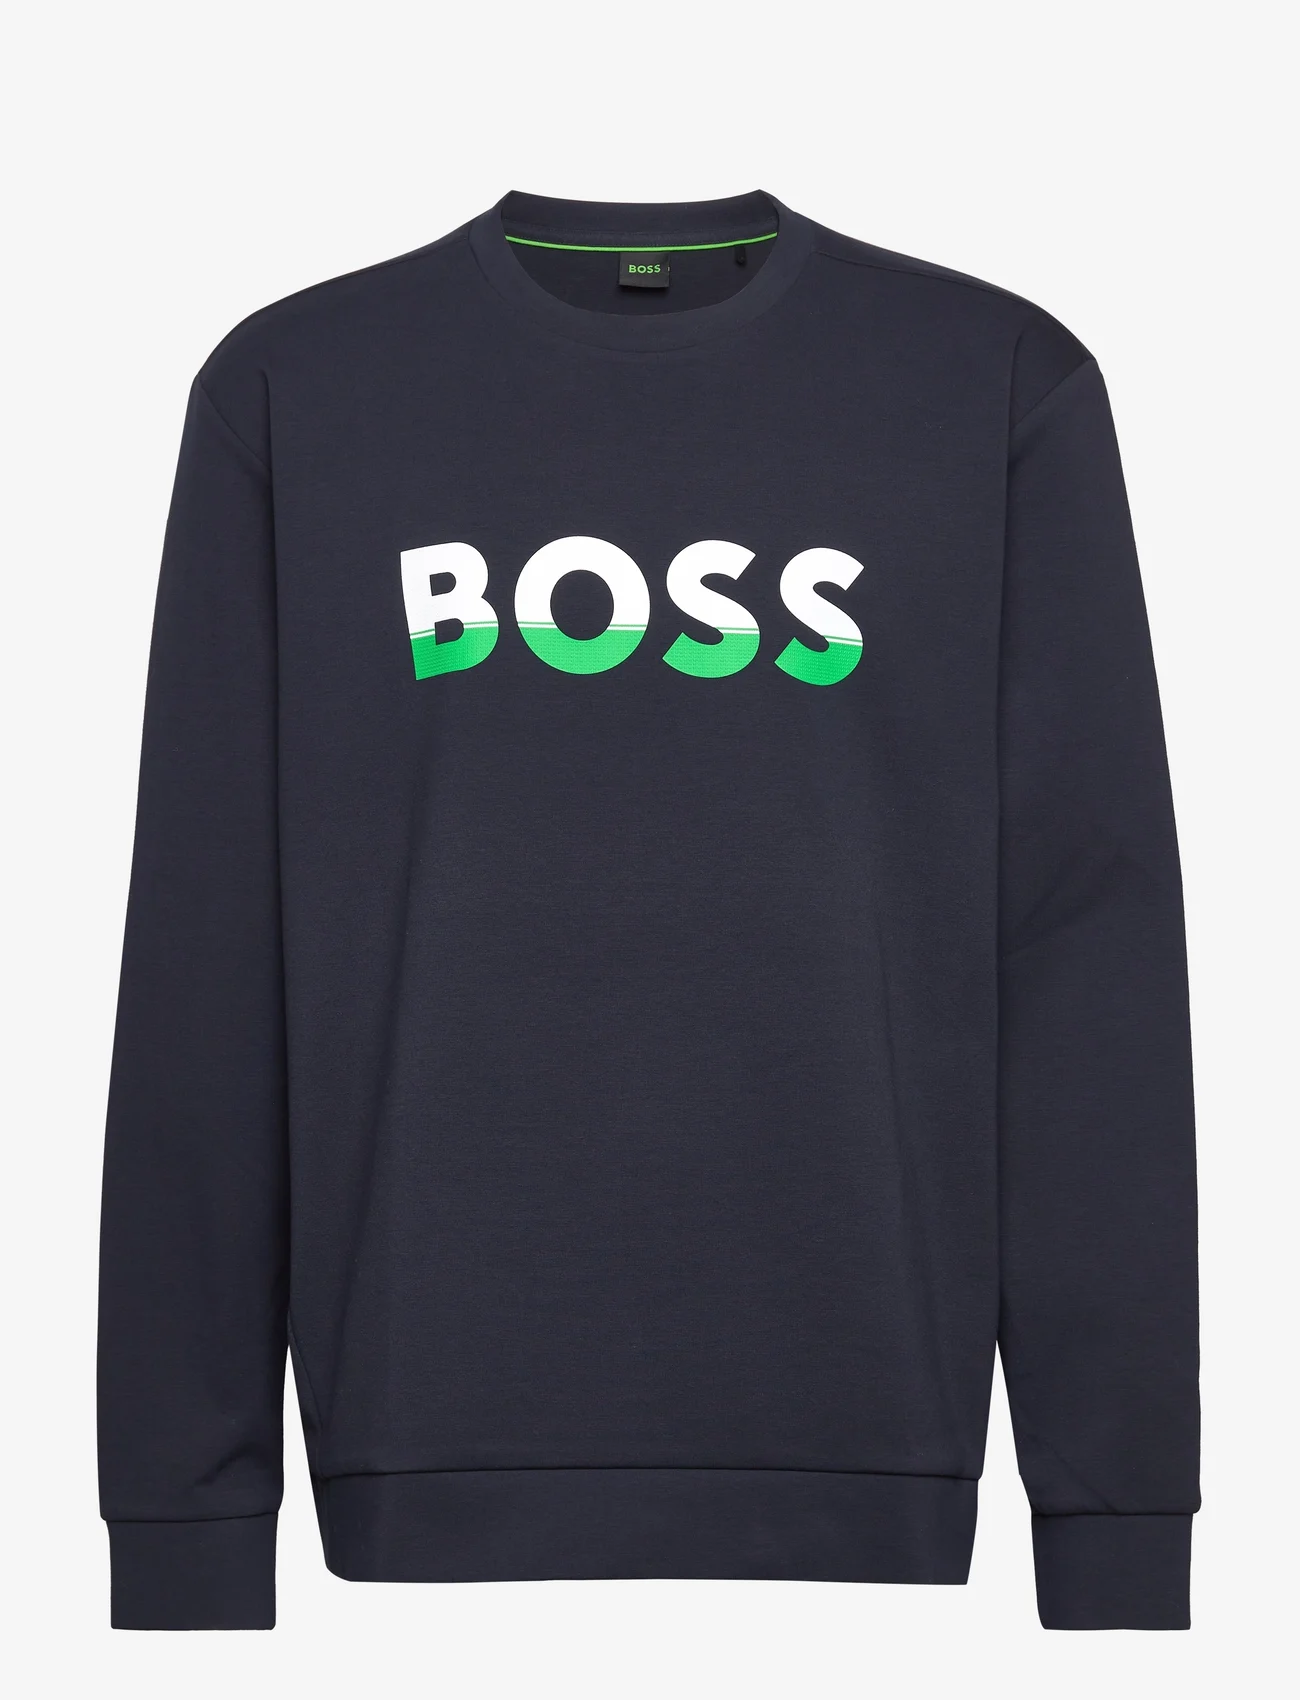 BOSS - Salbo 1 - sweatshirts - dark blue - 0